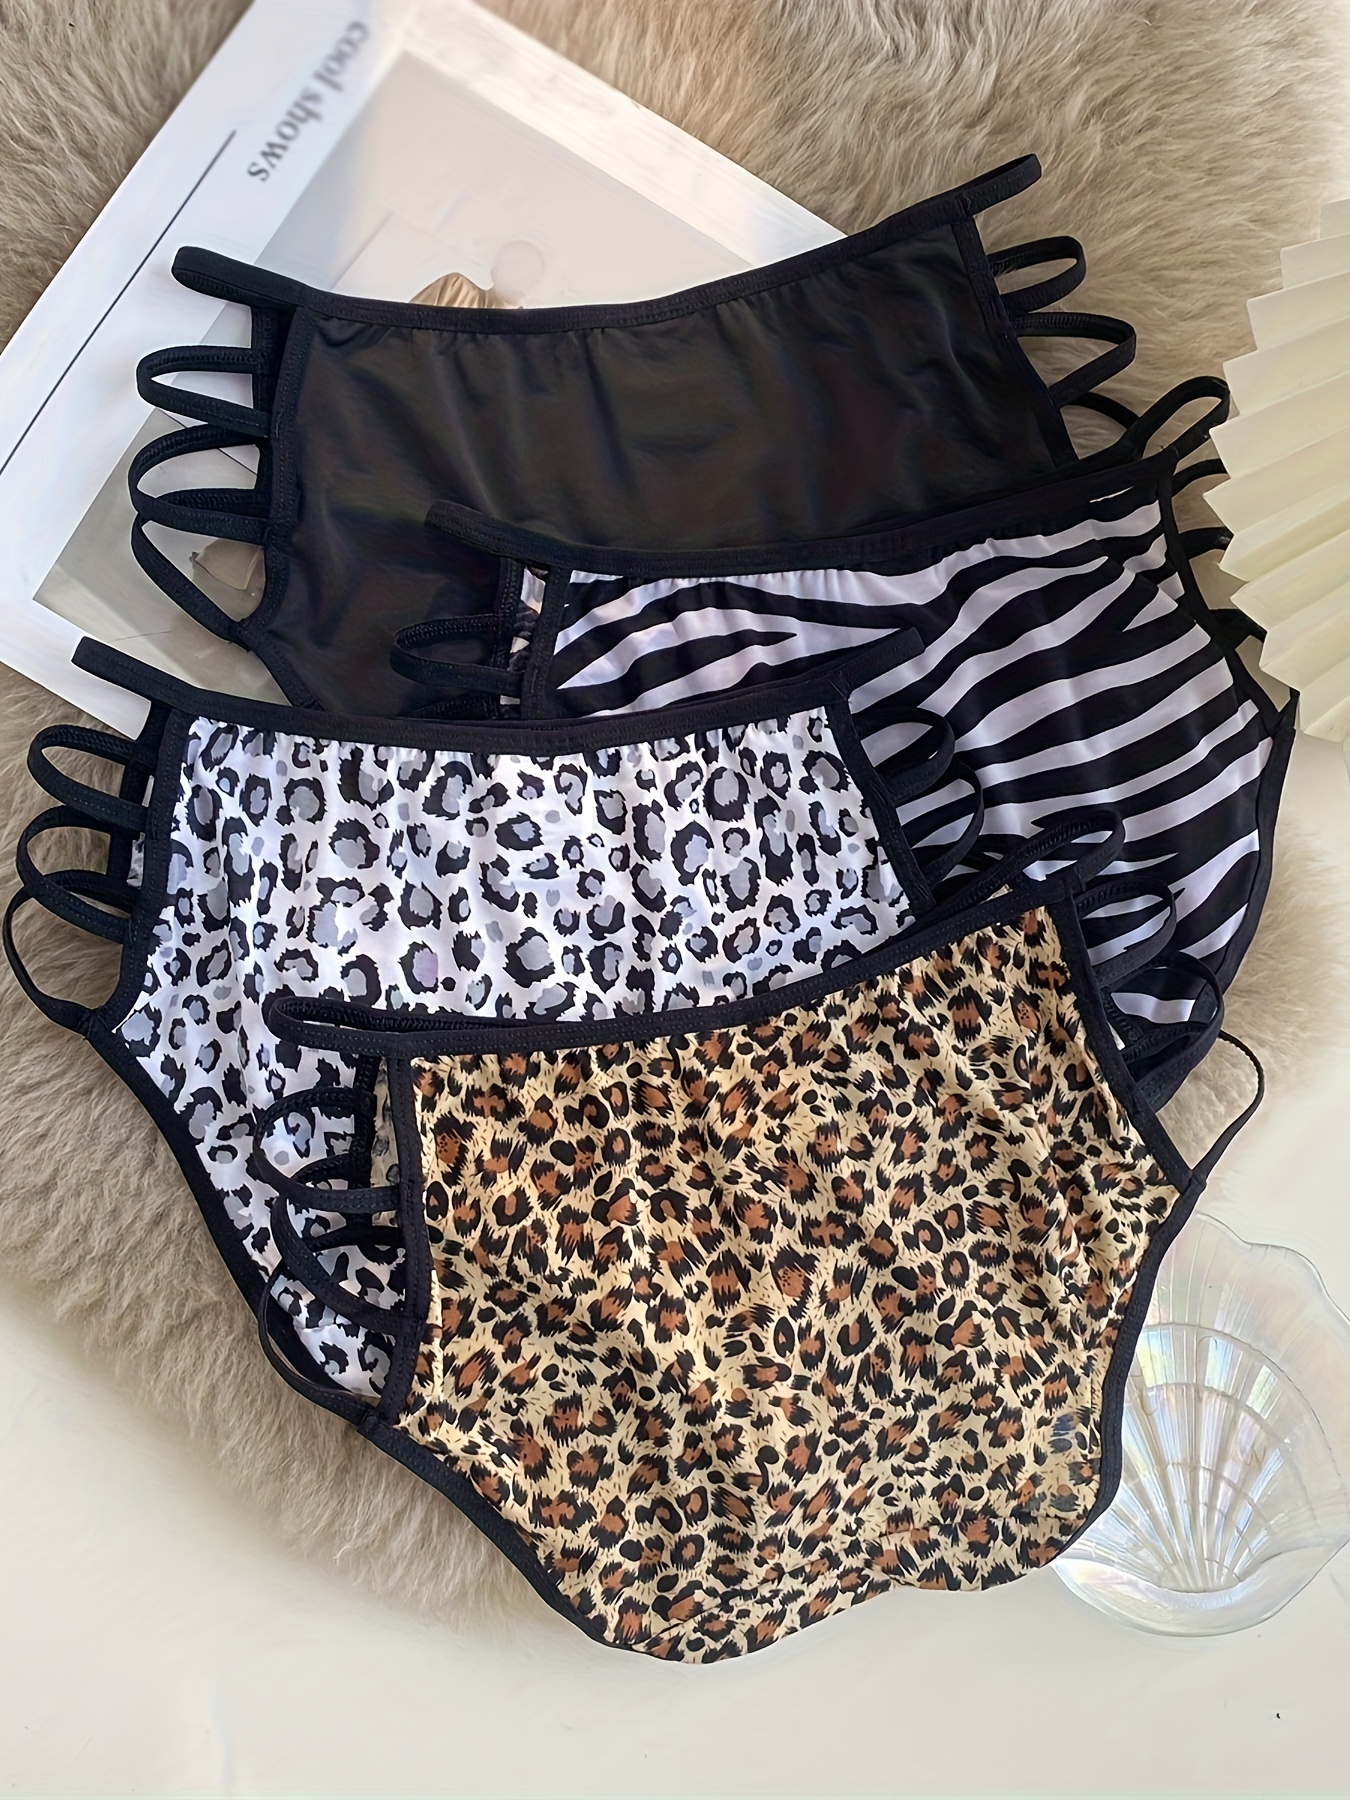 Leopard Print Panties For Women Comfortable Briefs Ladies Plus